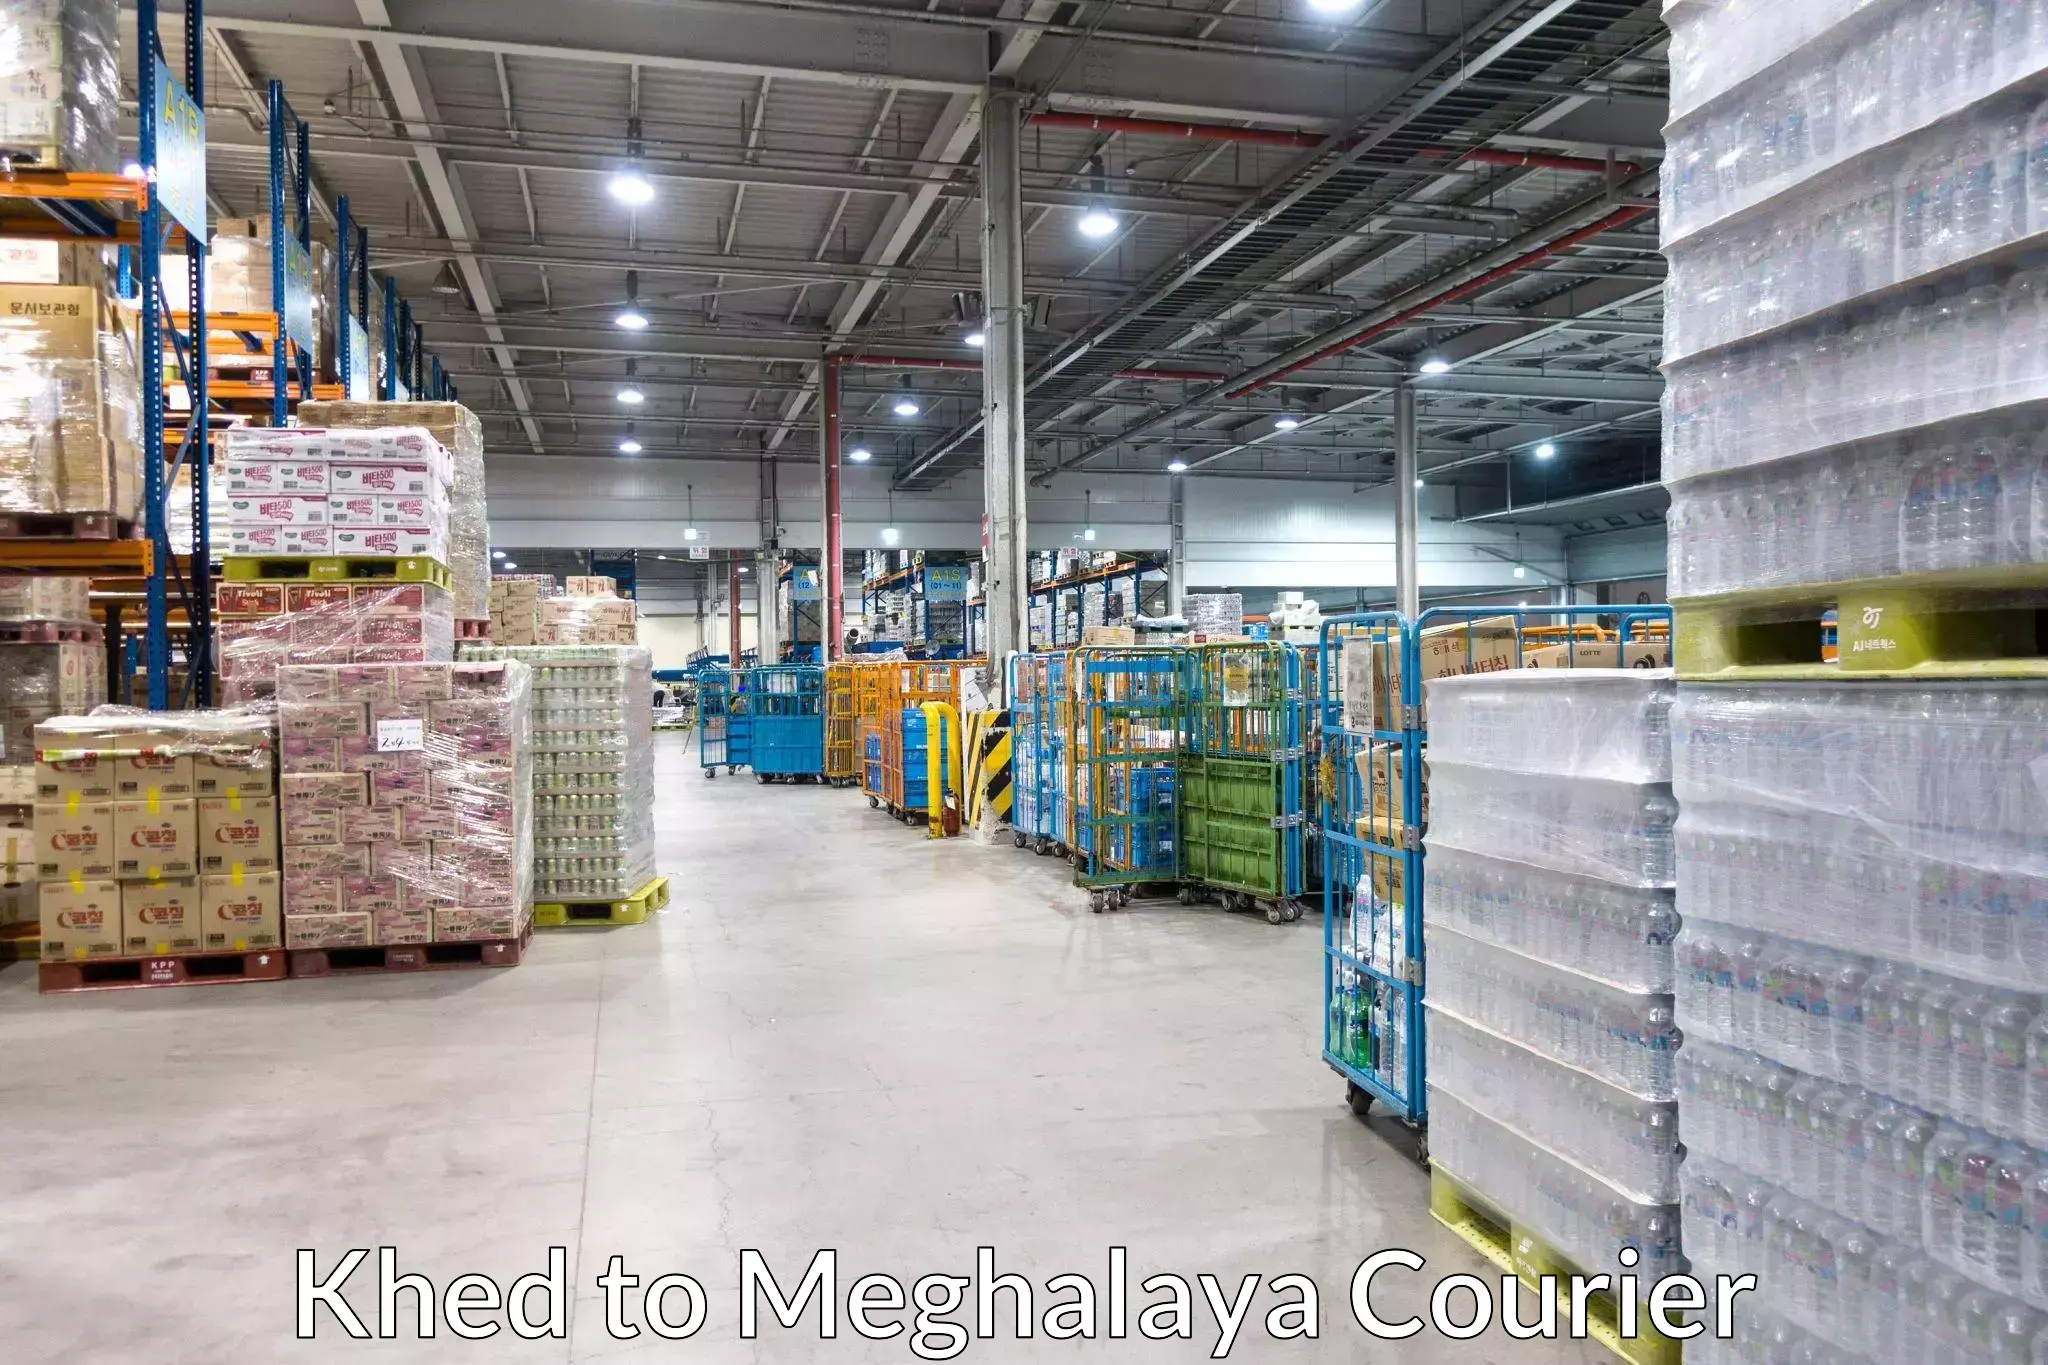 Express logistics providers Khed to Meghalaya